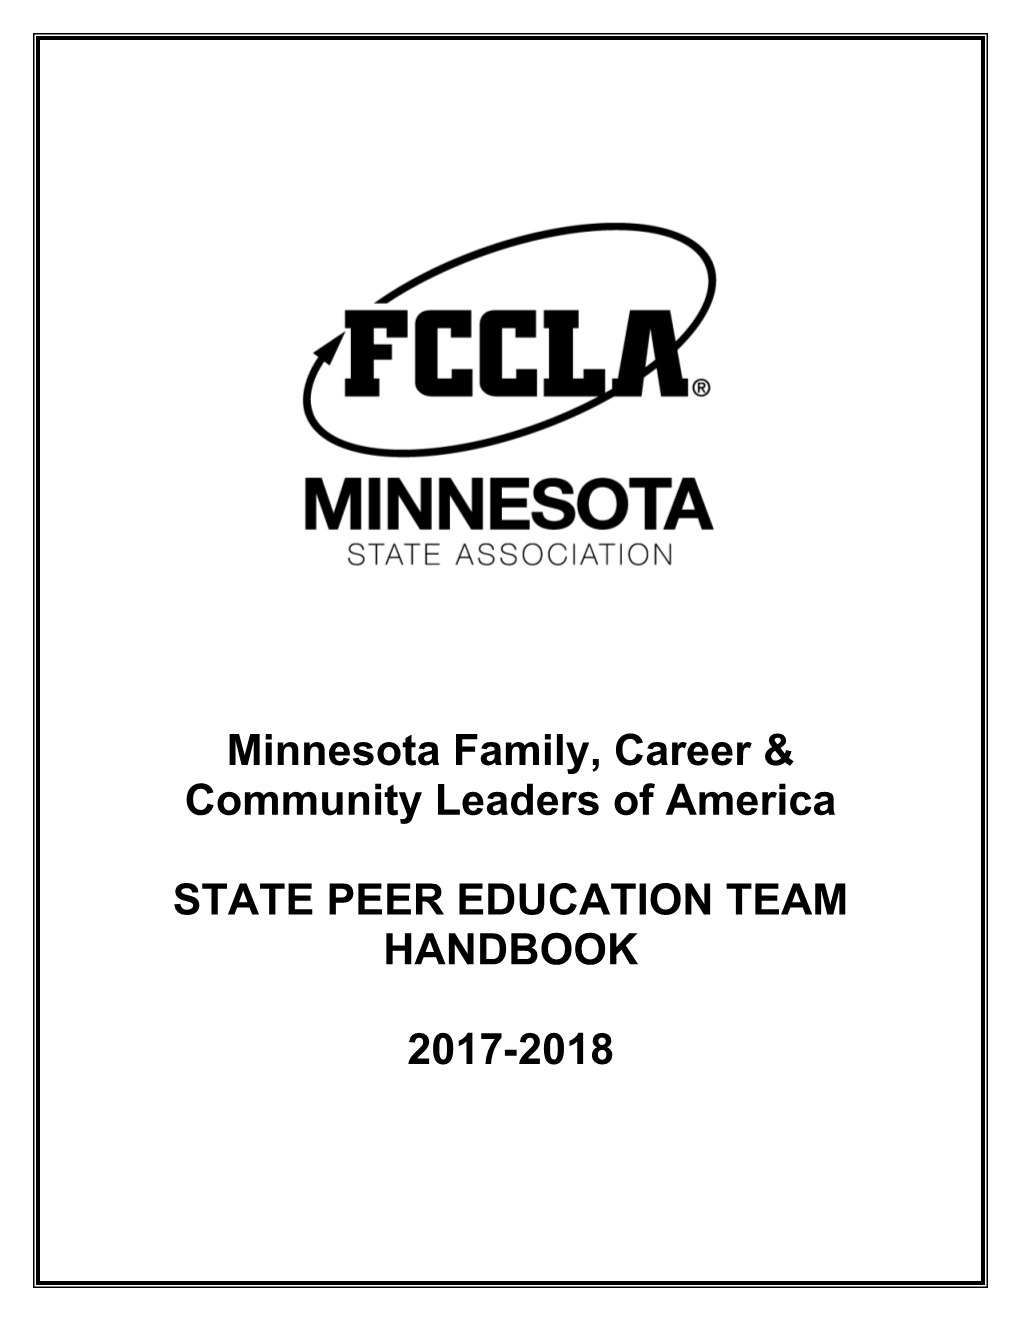 Minnesota Family, Career & Community Leaders of America